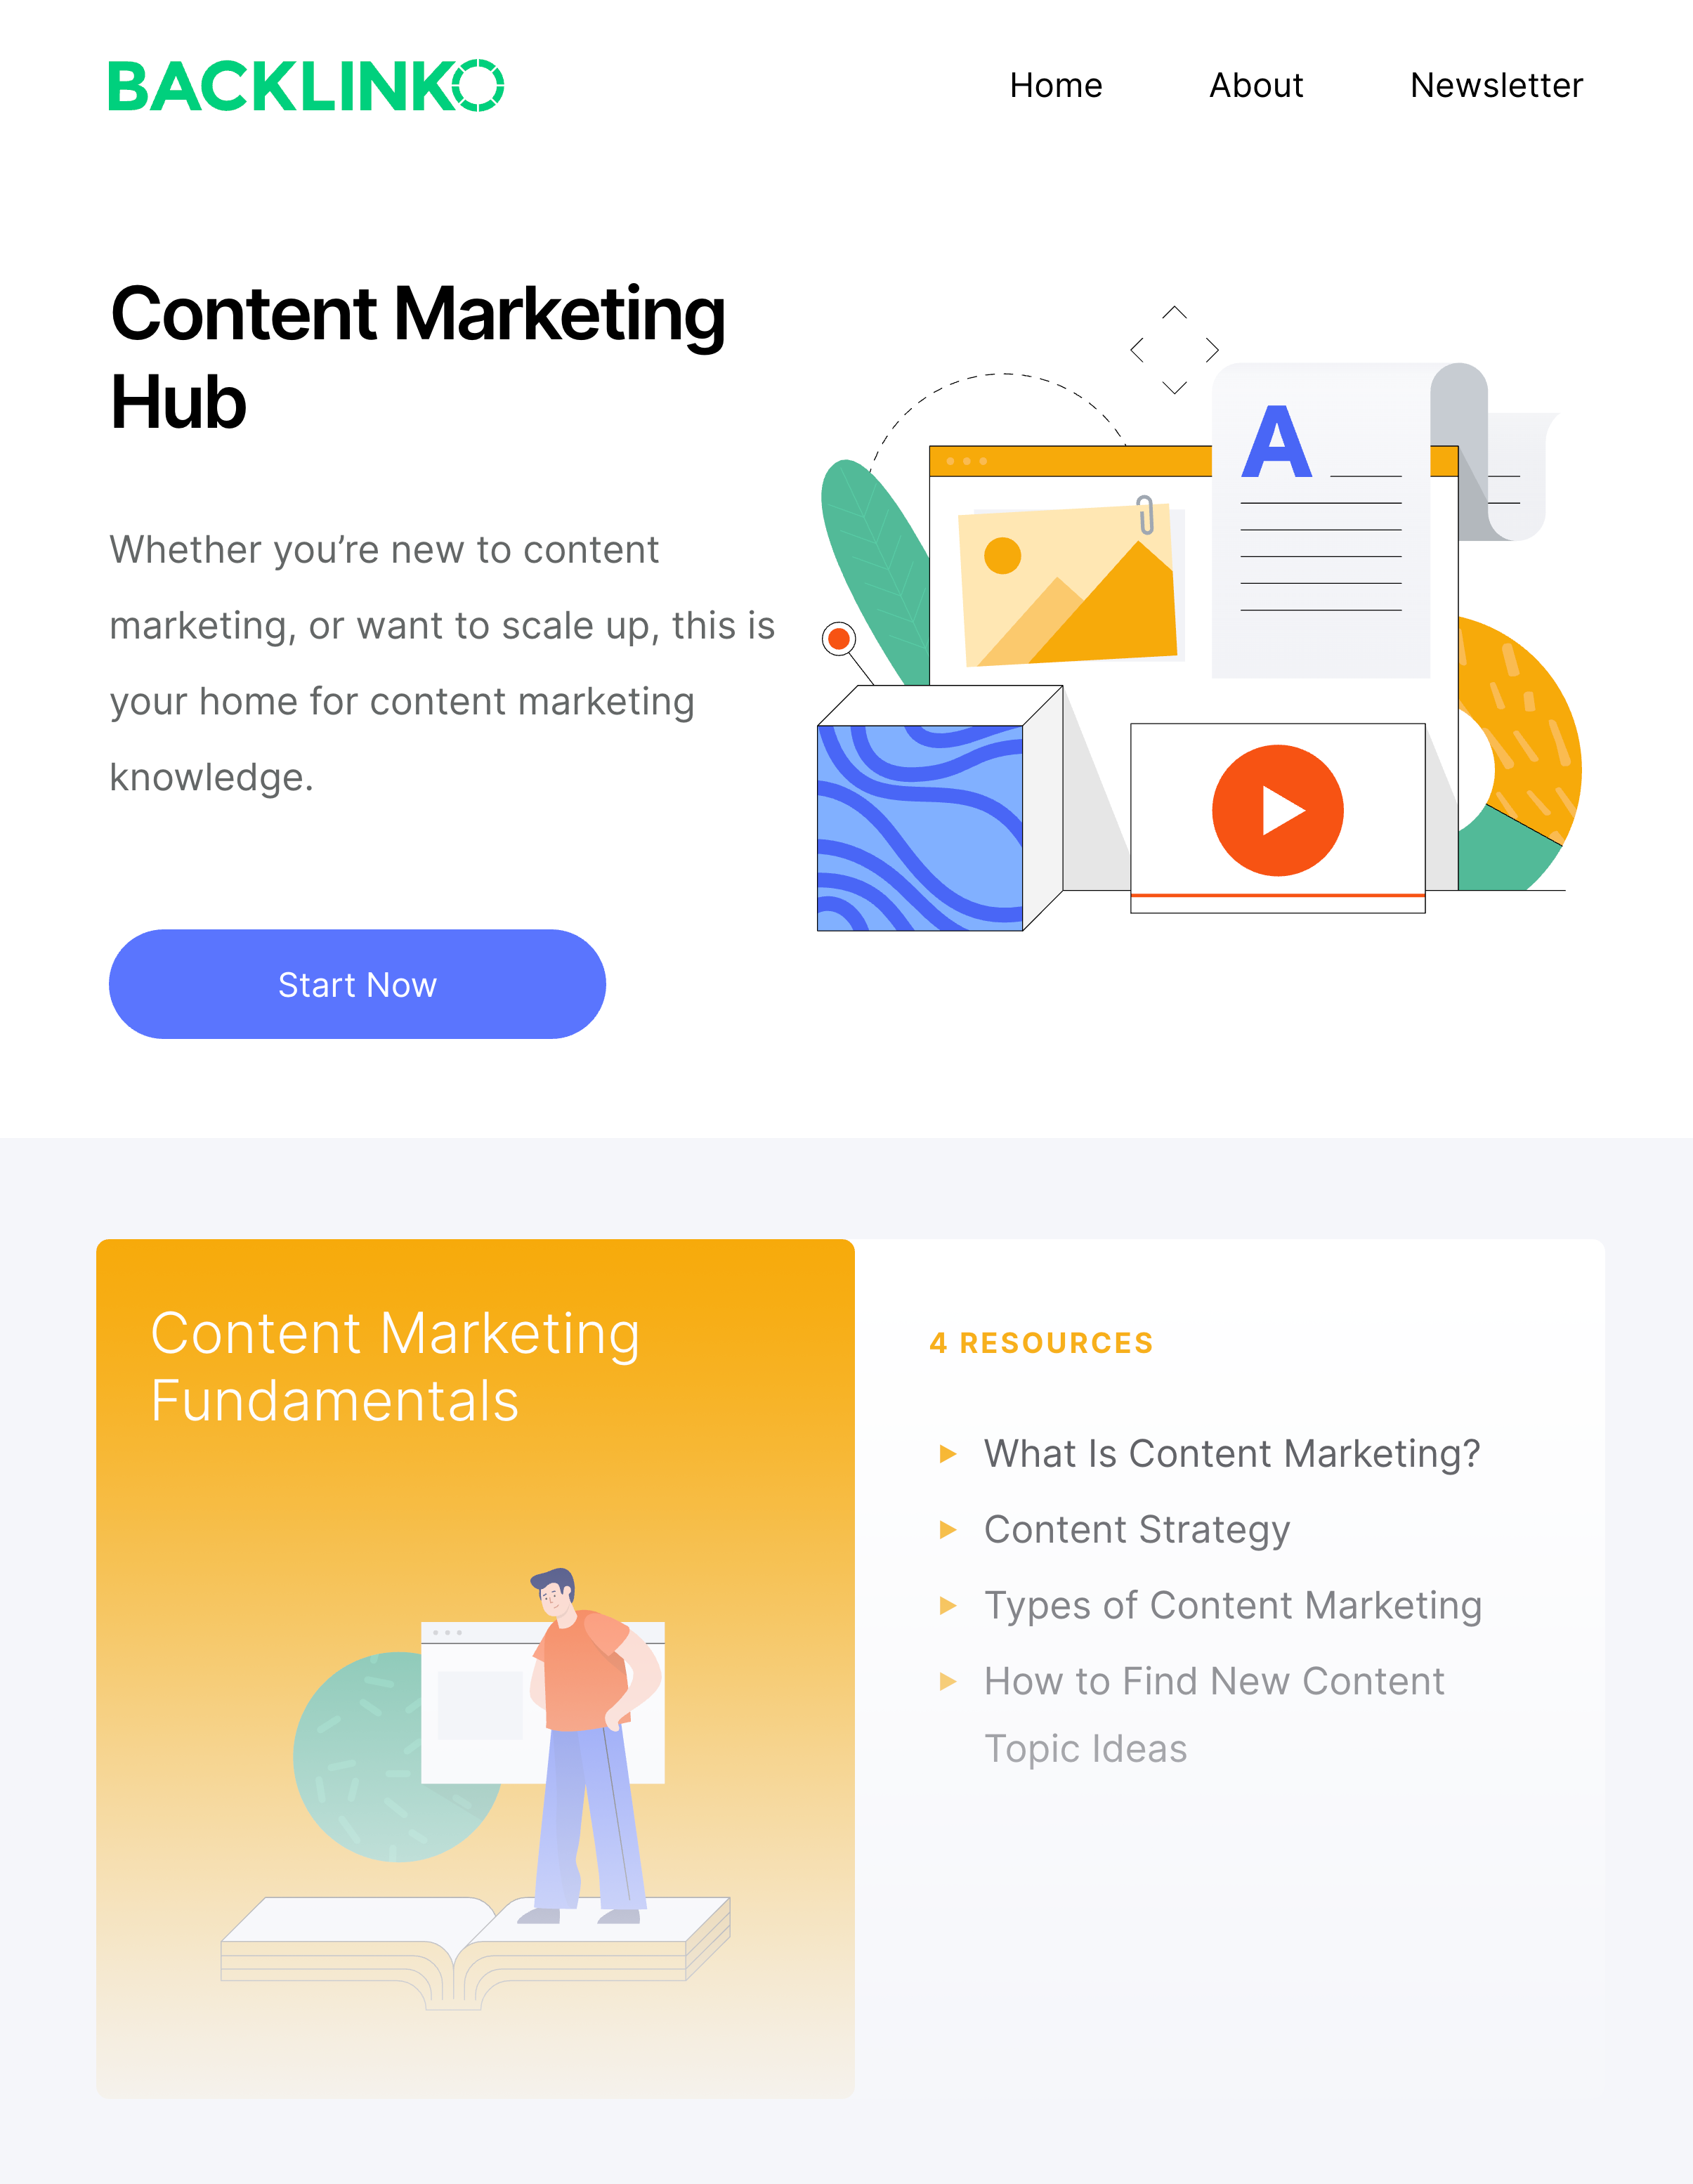 Backlinko content marketing hub